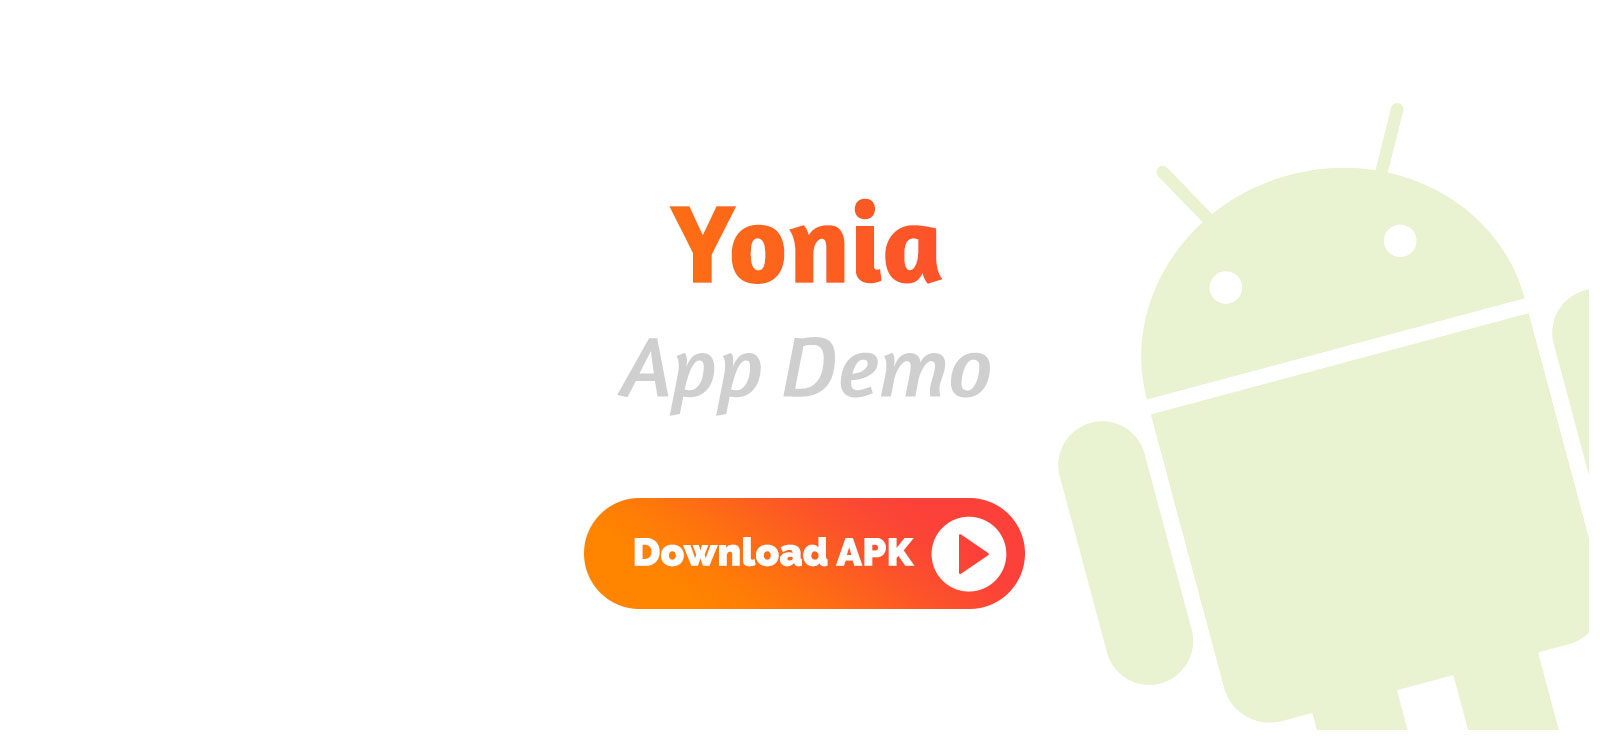 Yonia - Complete React Native Recipes App + Admin Panel - 3